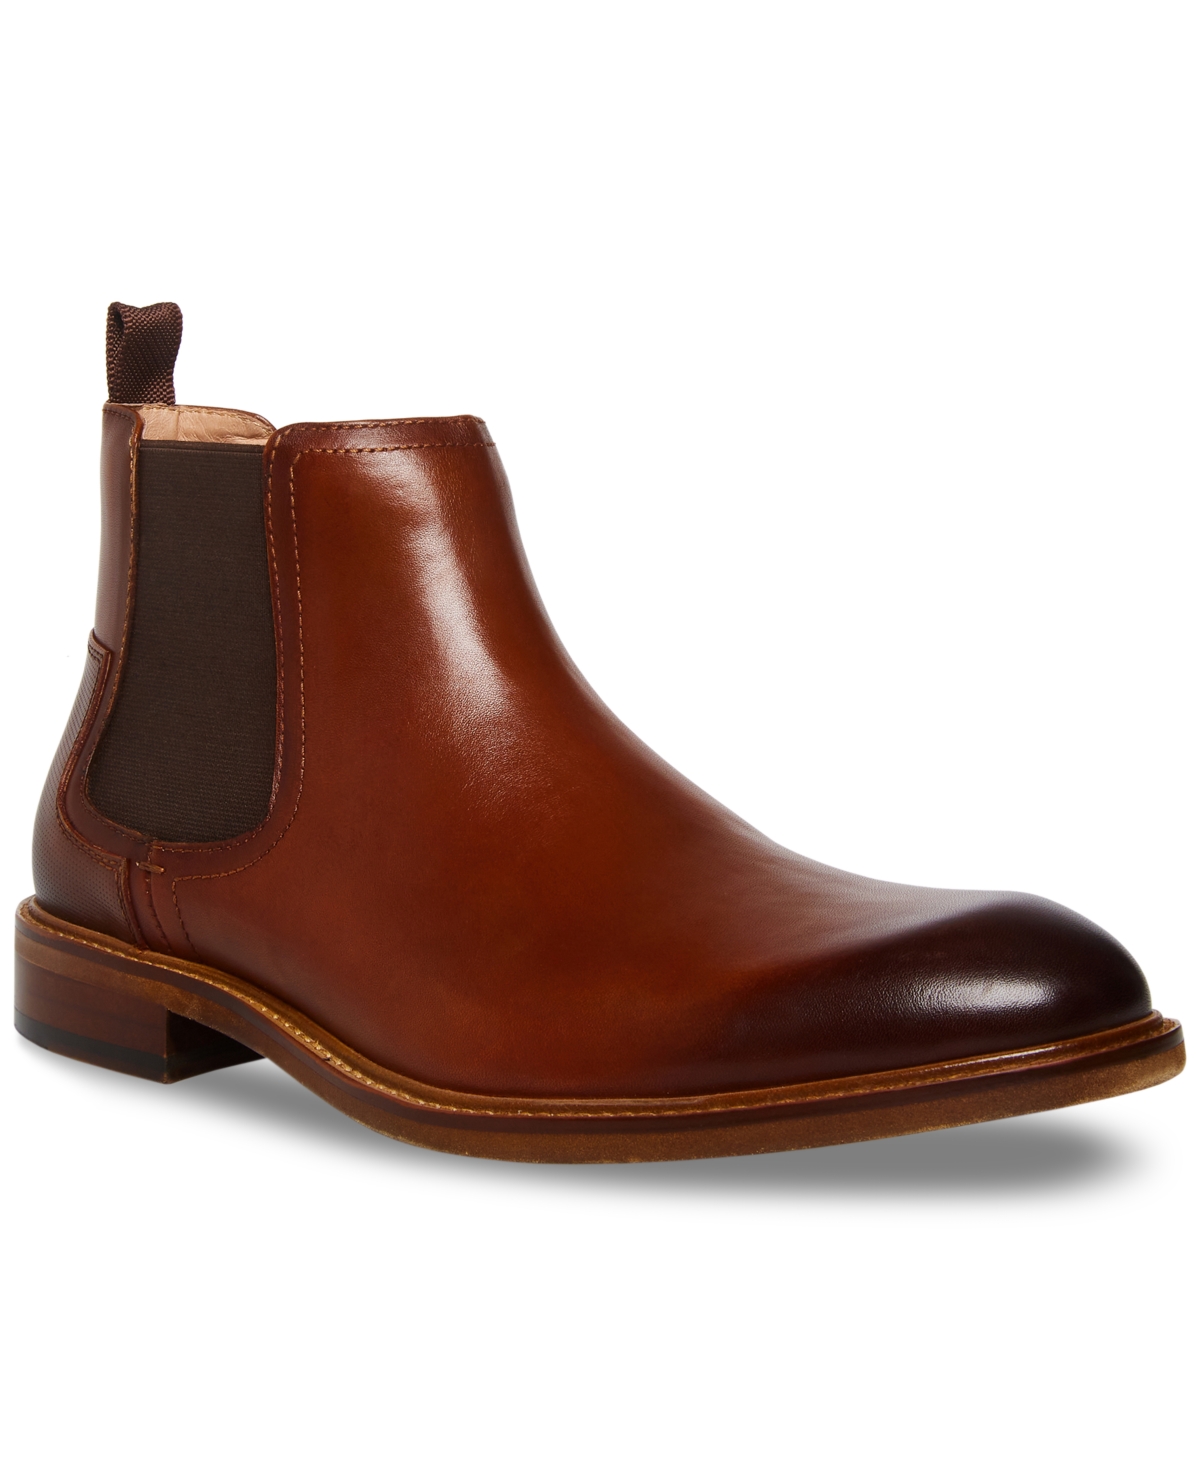 Men's Heritage Leather Chelsea Boot - Tan